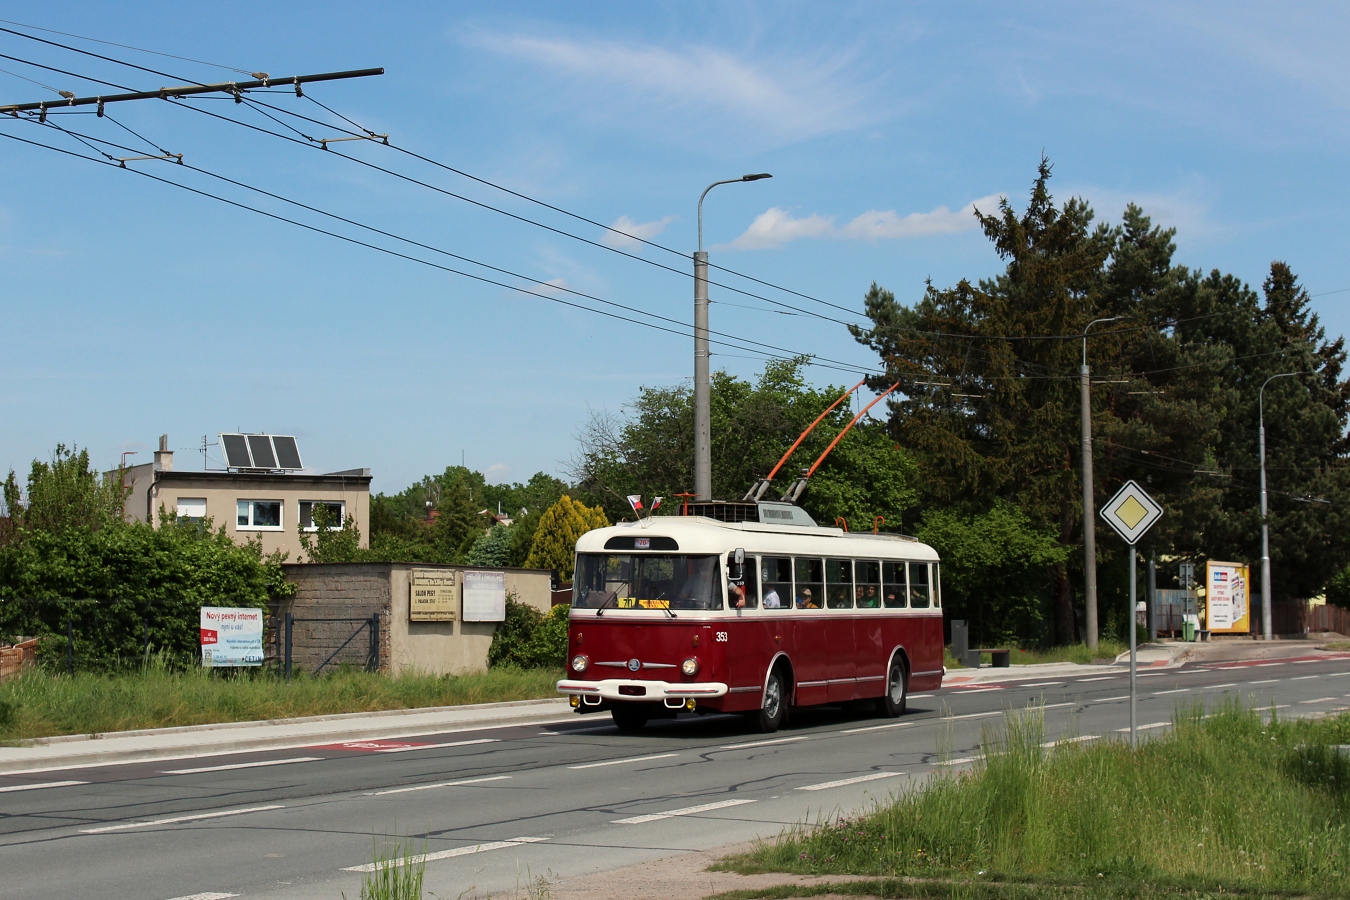 Пардубице, Škoda 9TrHT26 № 353; Пардубице — Празднование 70-летия троллейбусного движения в Пардубице